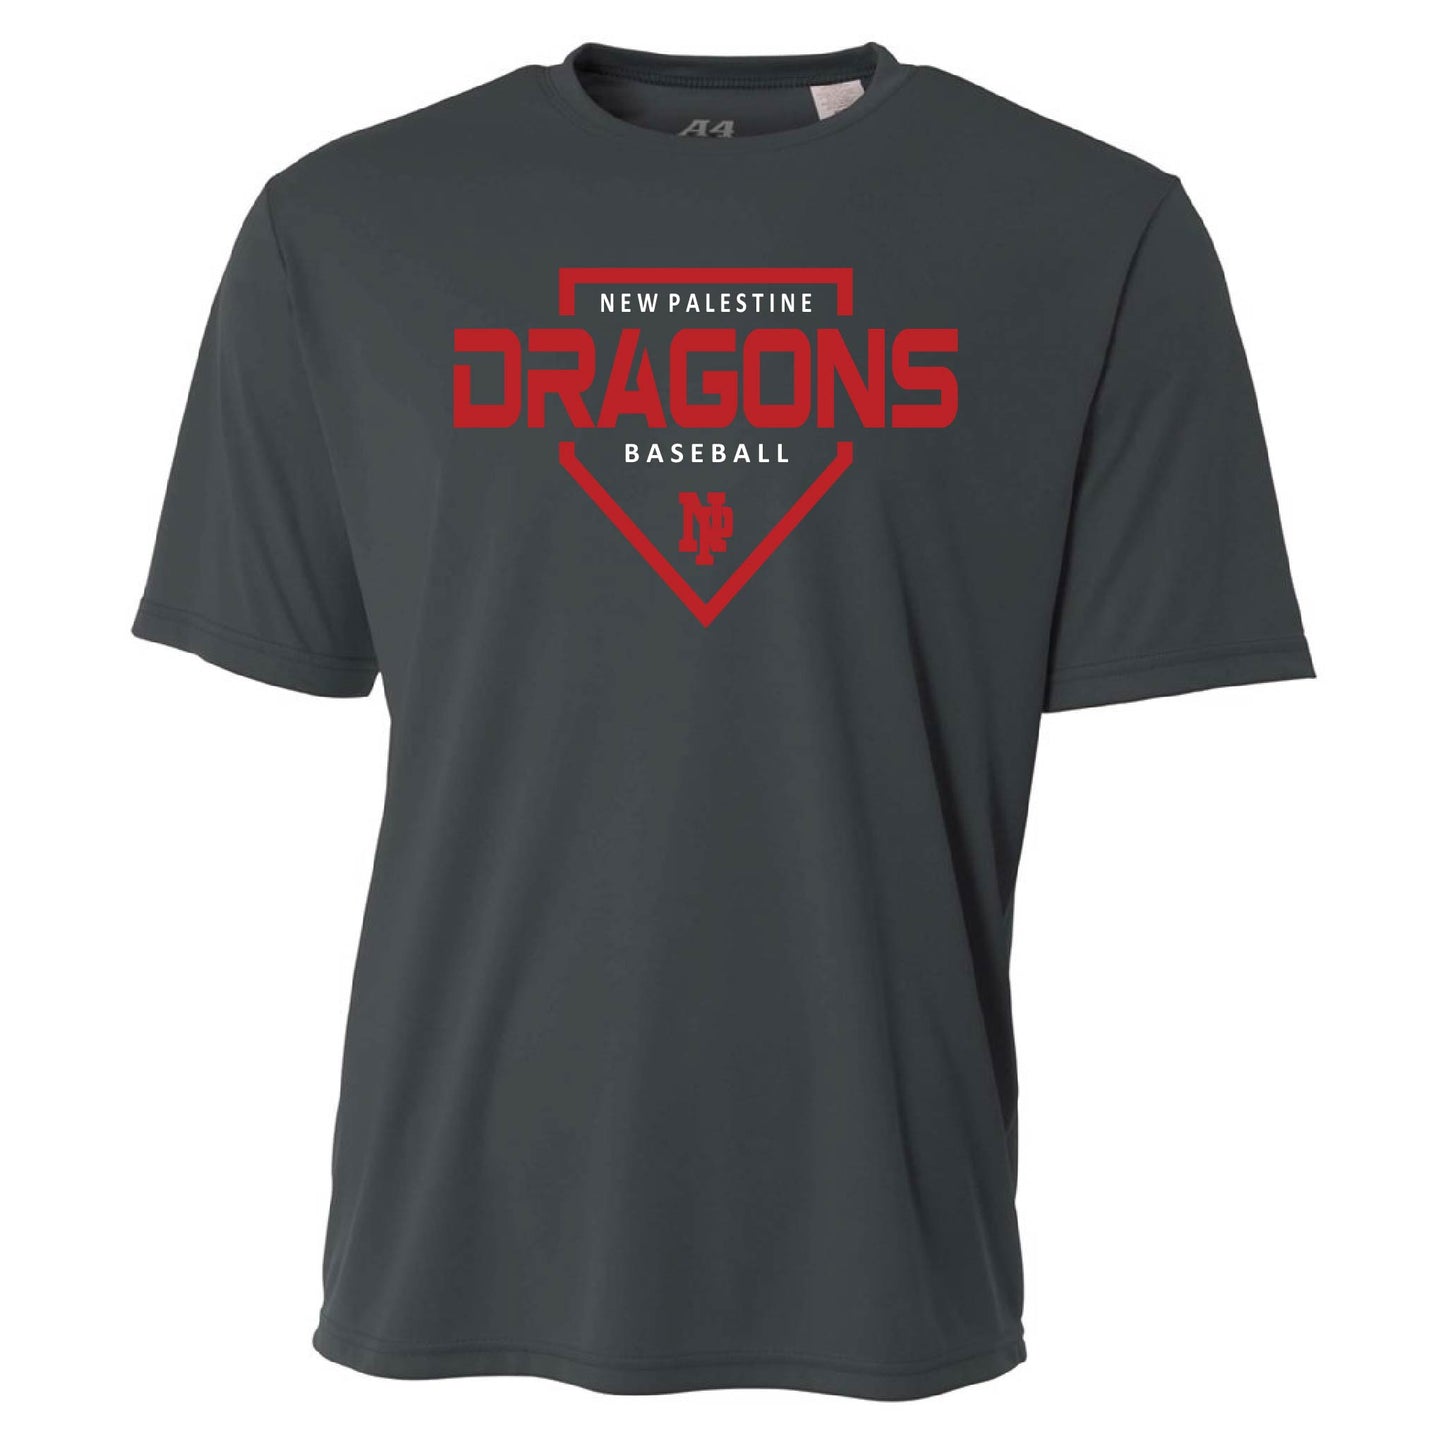 Youth S/S T-Shirt - DRAGONS Baseball